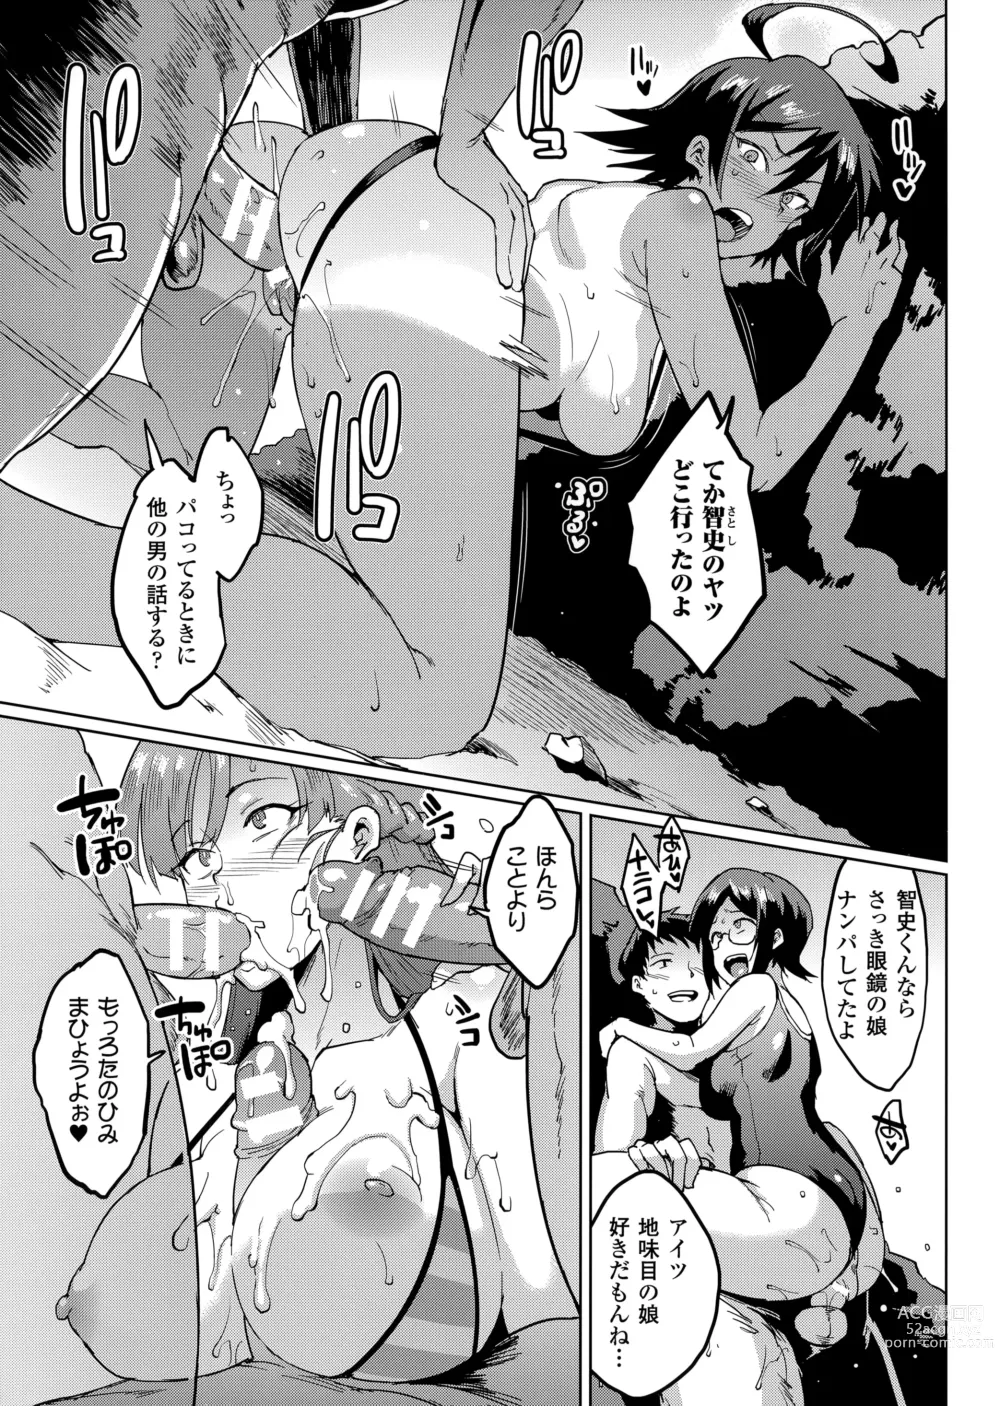 Page 3 of manga Parasite Queen Melonbooks Tokuten Kakioroshi Leaflet Parasite Queen -OPEN SEASON-